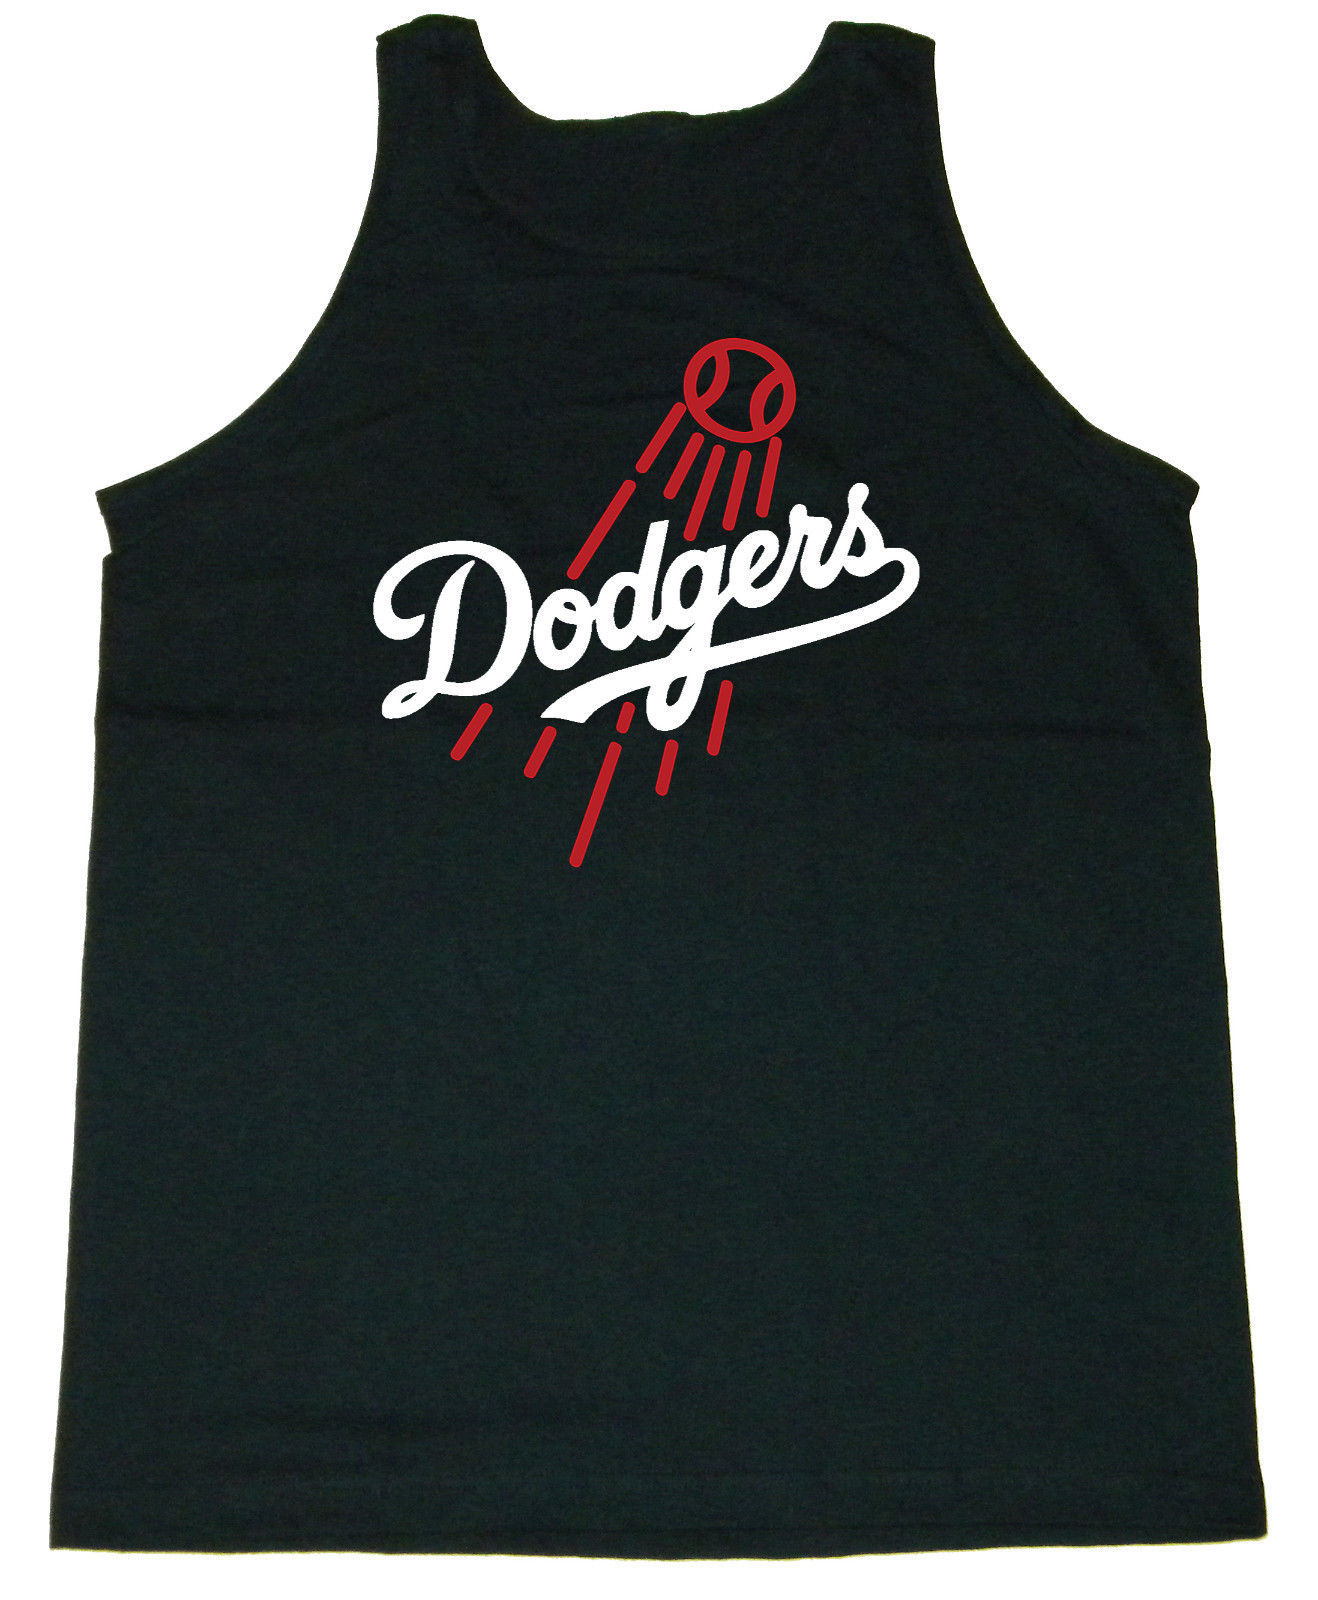 Los Angeles Dodgers Logo Men's Tank Tops (S / M / L / XL) *2XL / 3XL Sizes